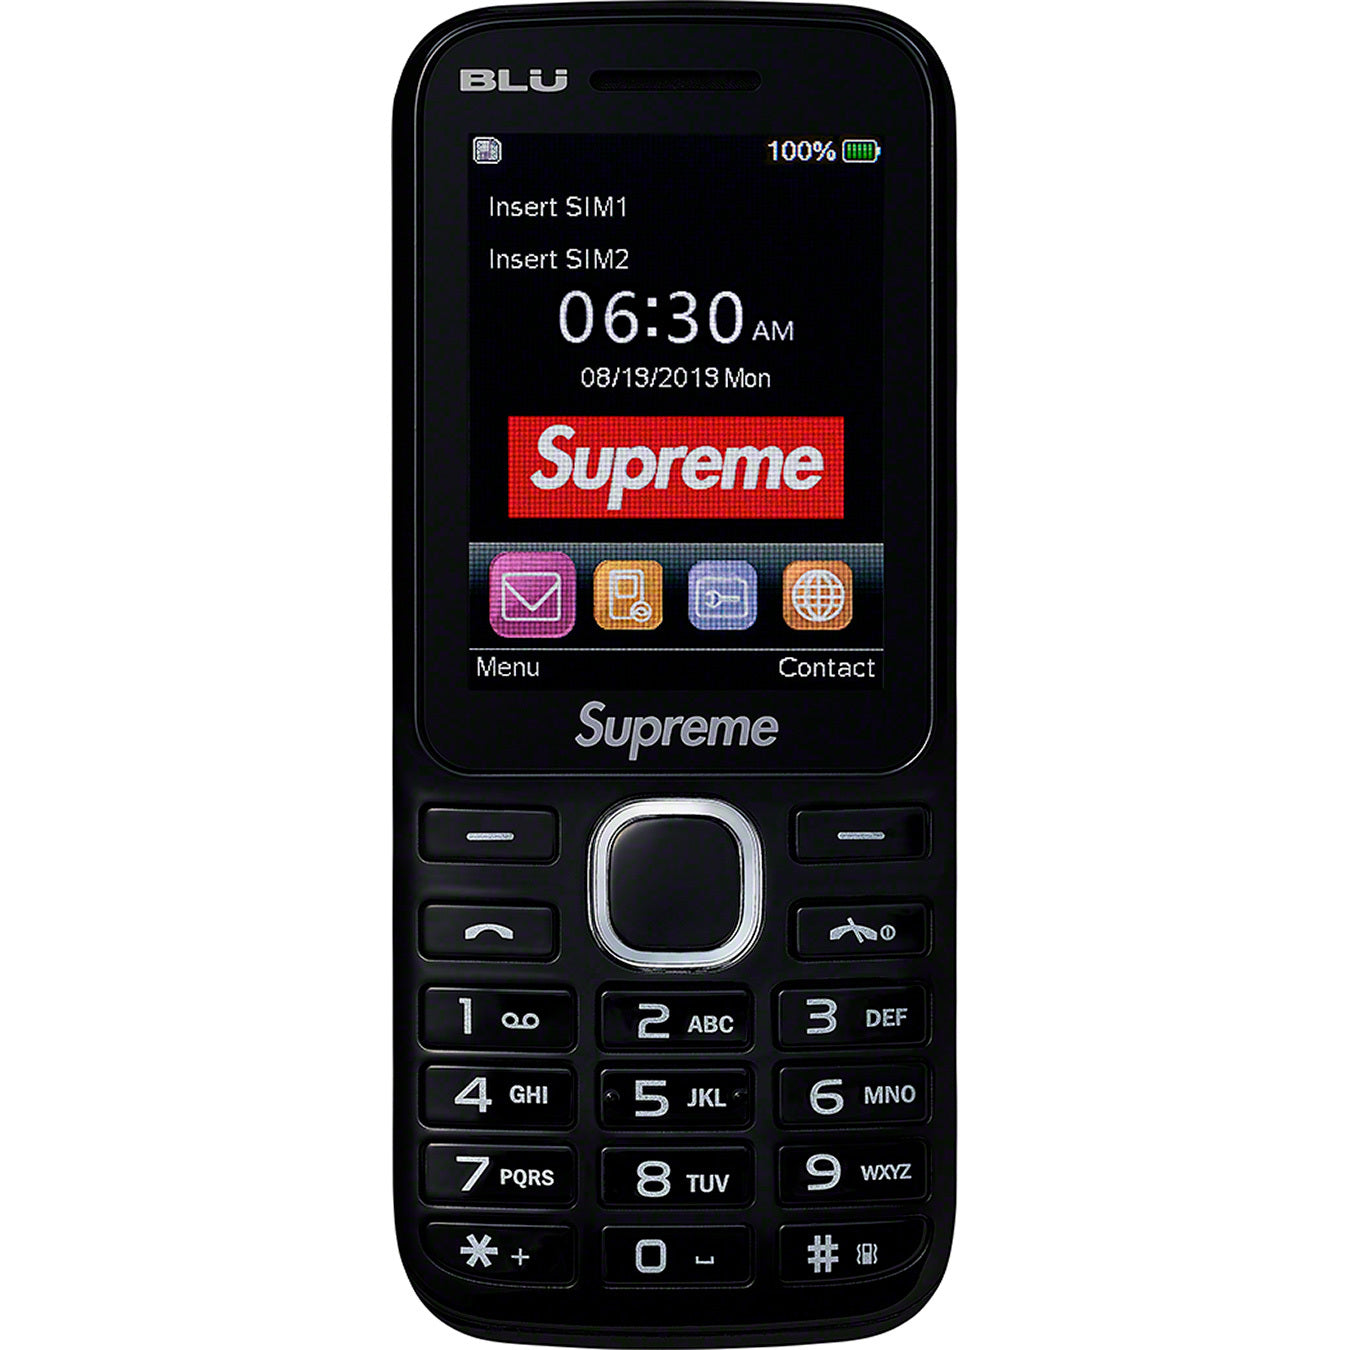 Supreme Blu Burner Phone - Black from Supreme